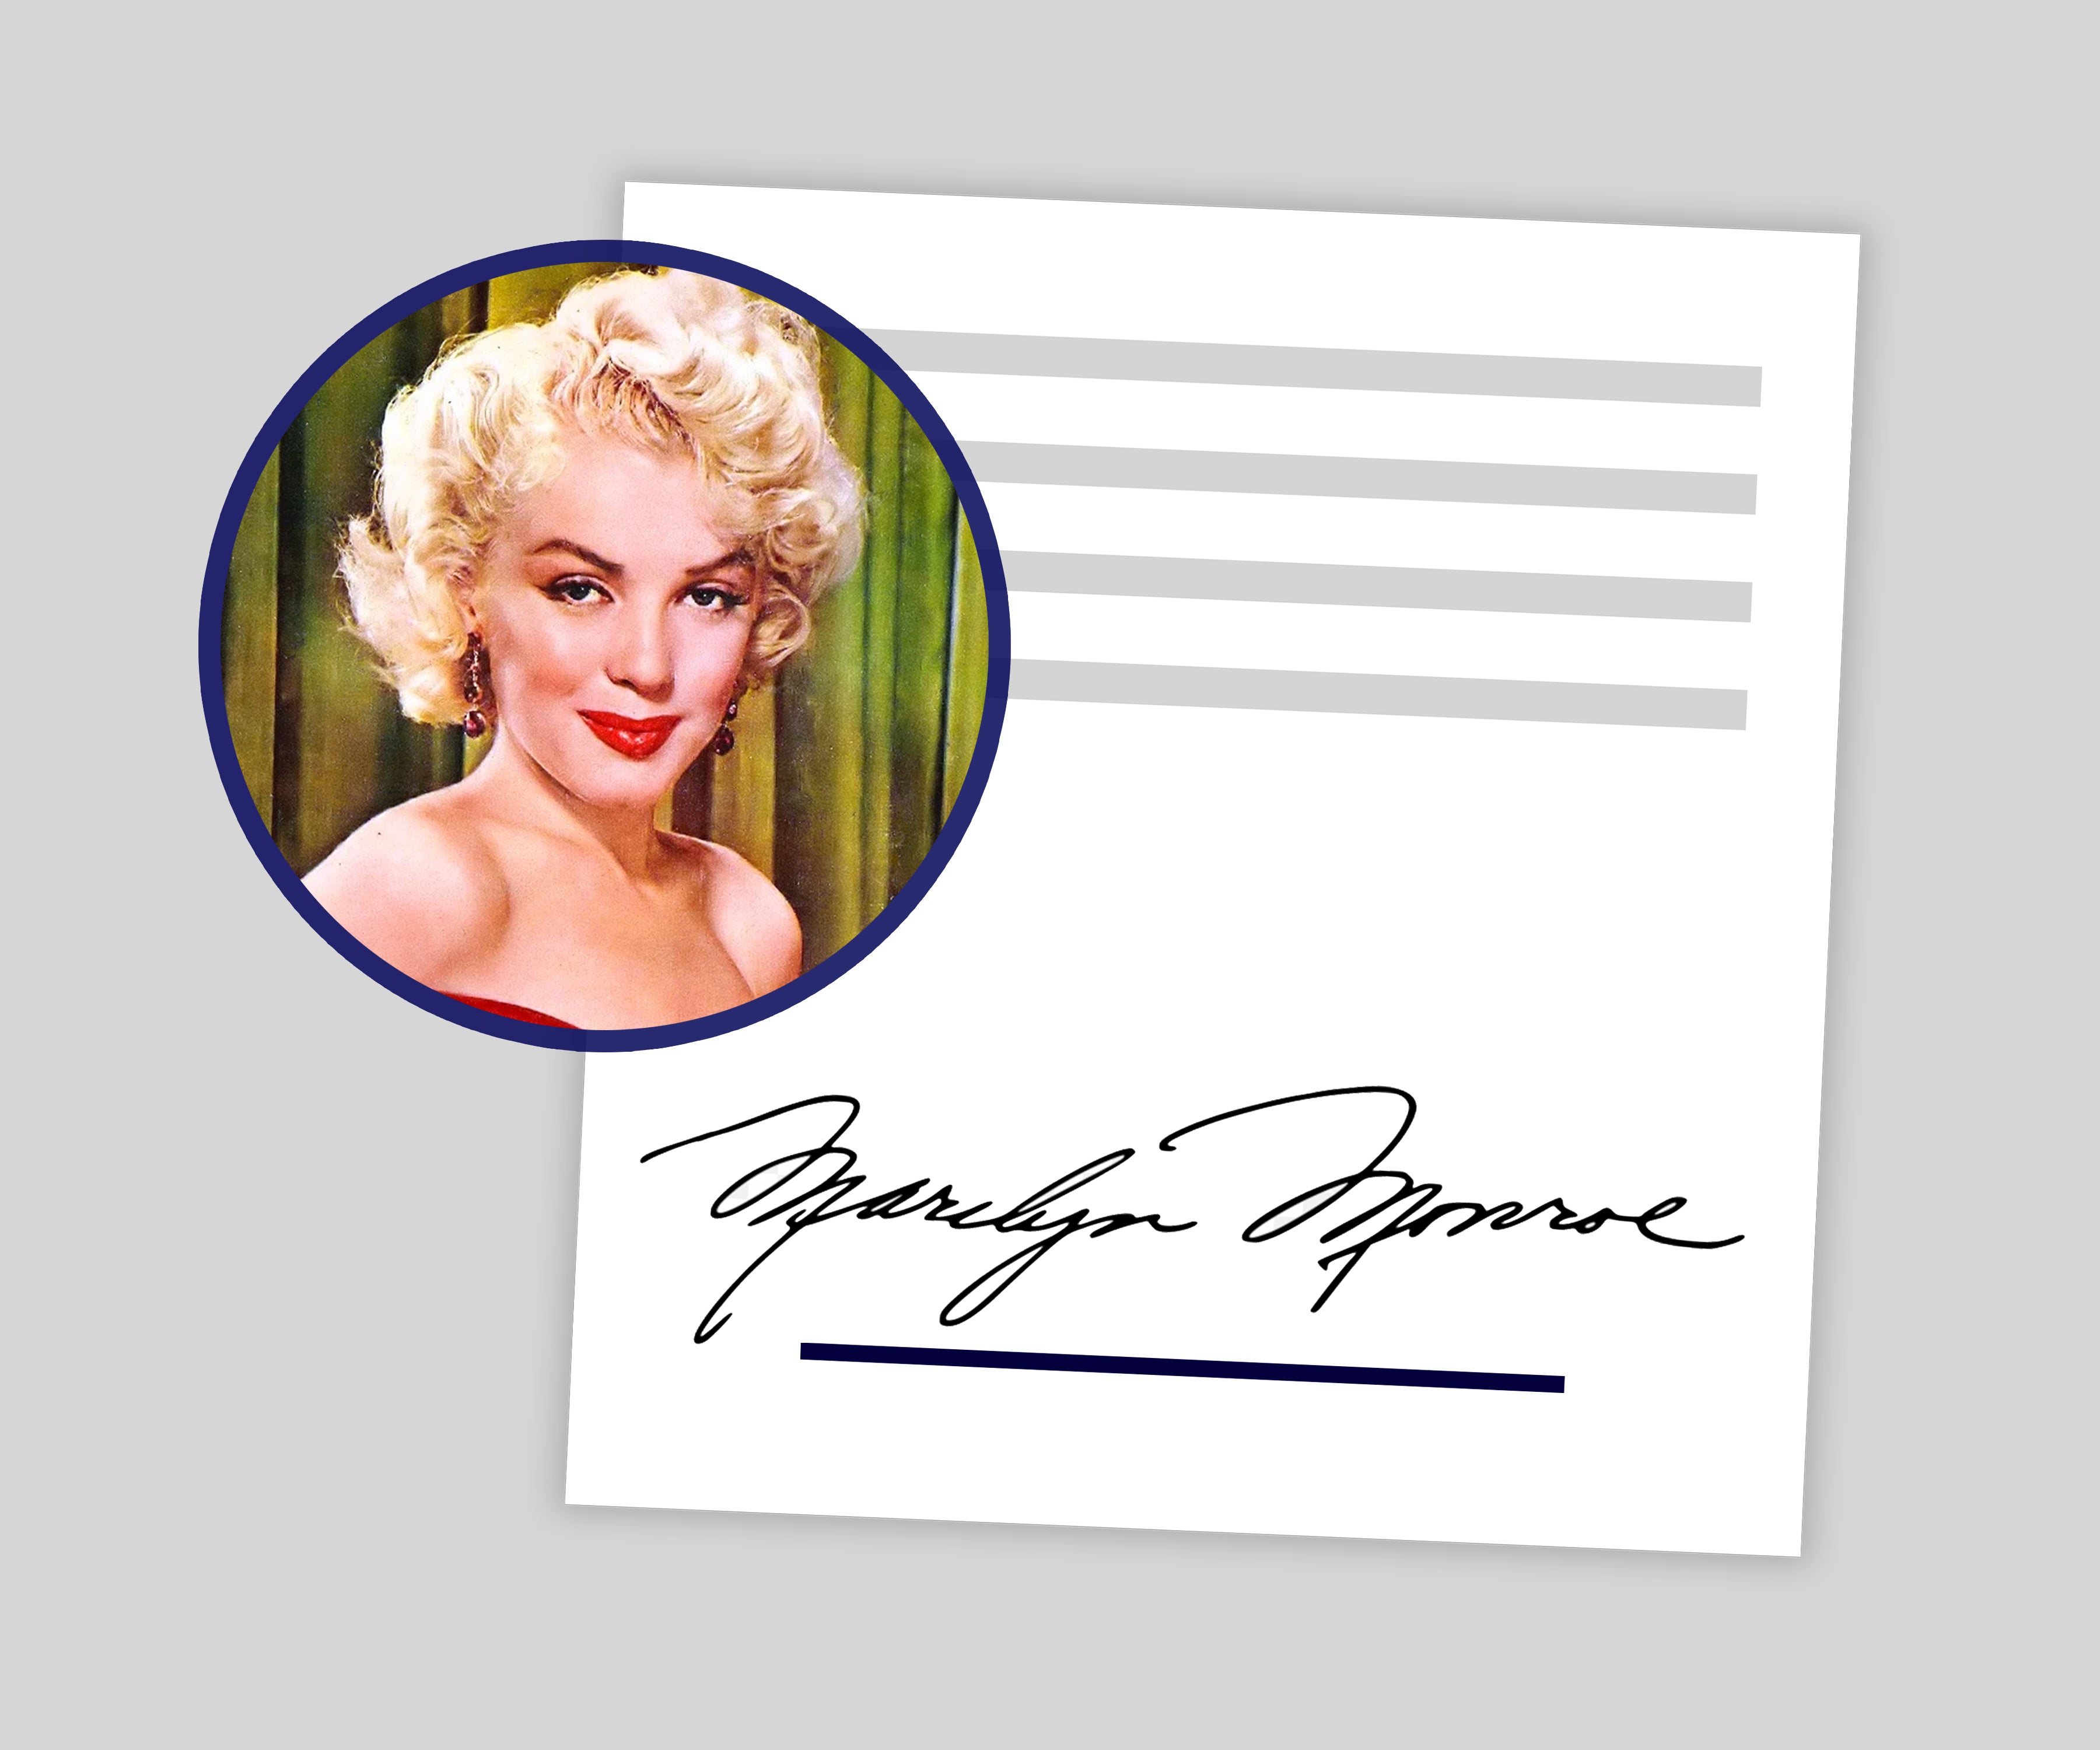 Marilyn Monroe News - Us Weekly